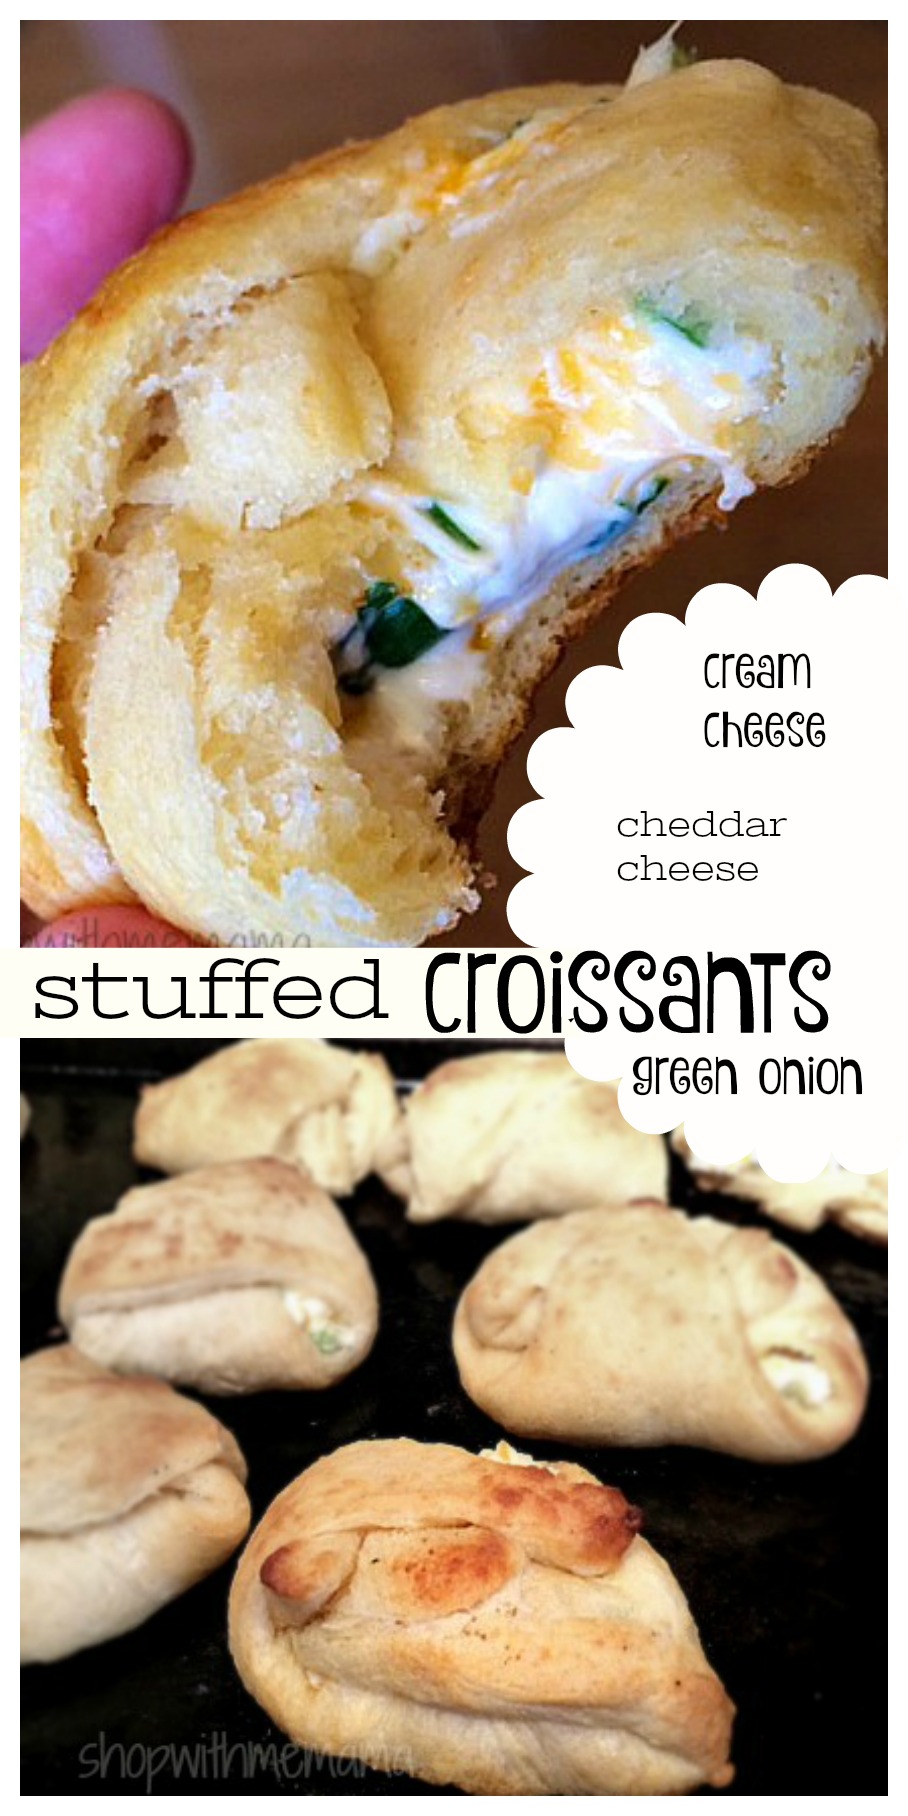 Cream Cheese Green Onion & Cheddar Cheese Stuffed Croissants